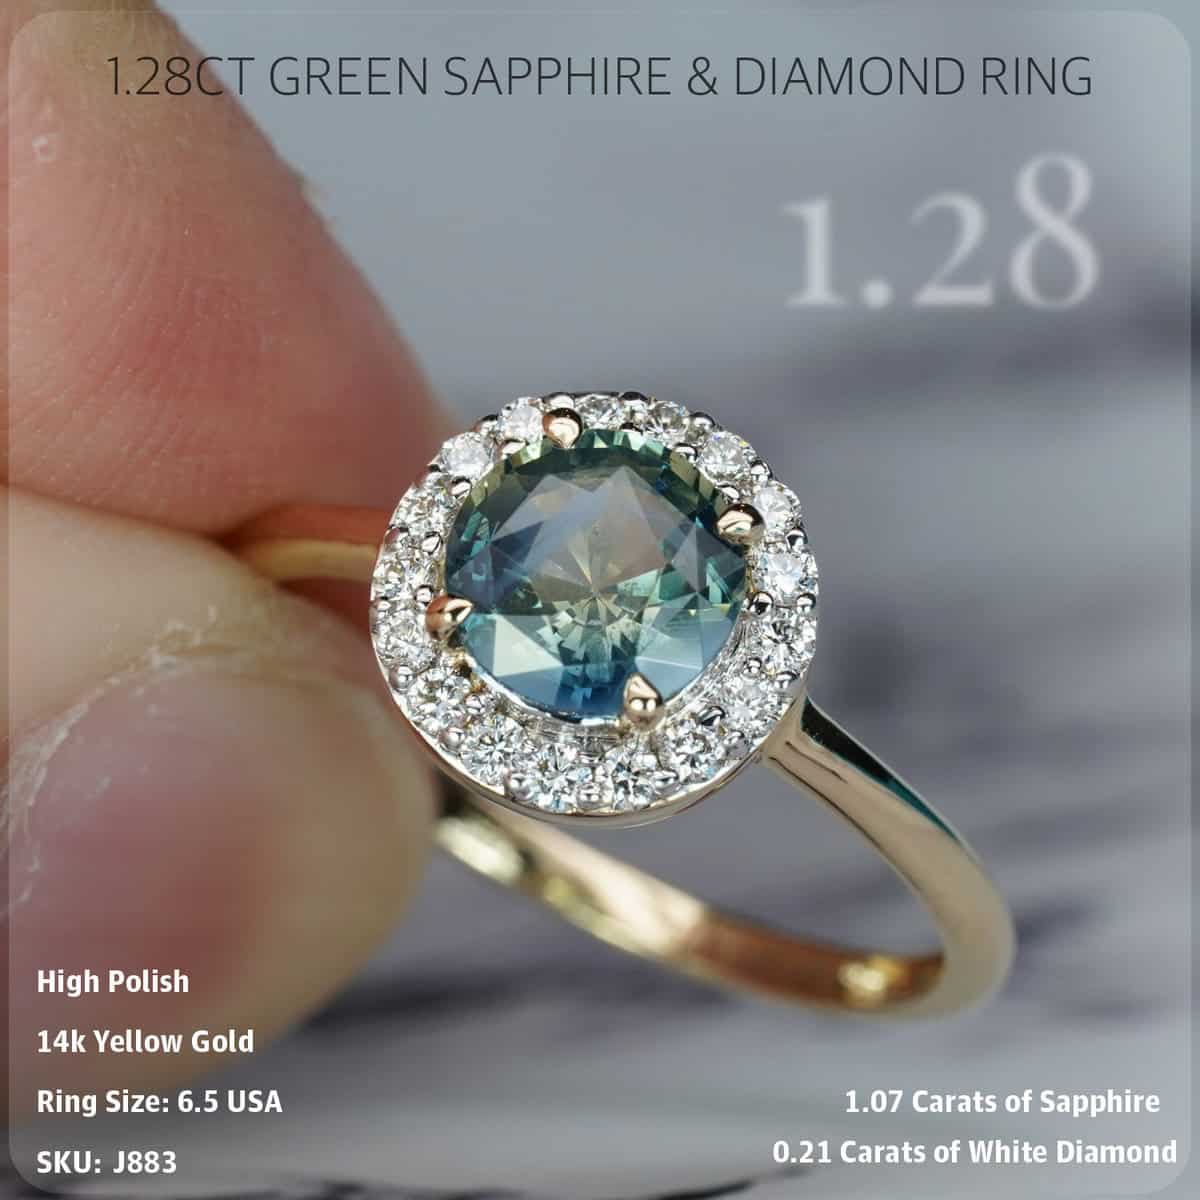 1.28CT Green Sapphire & Diamond Ring